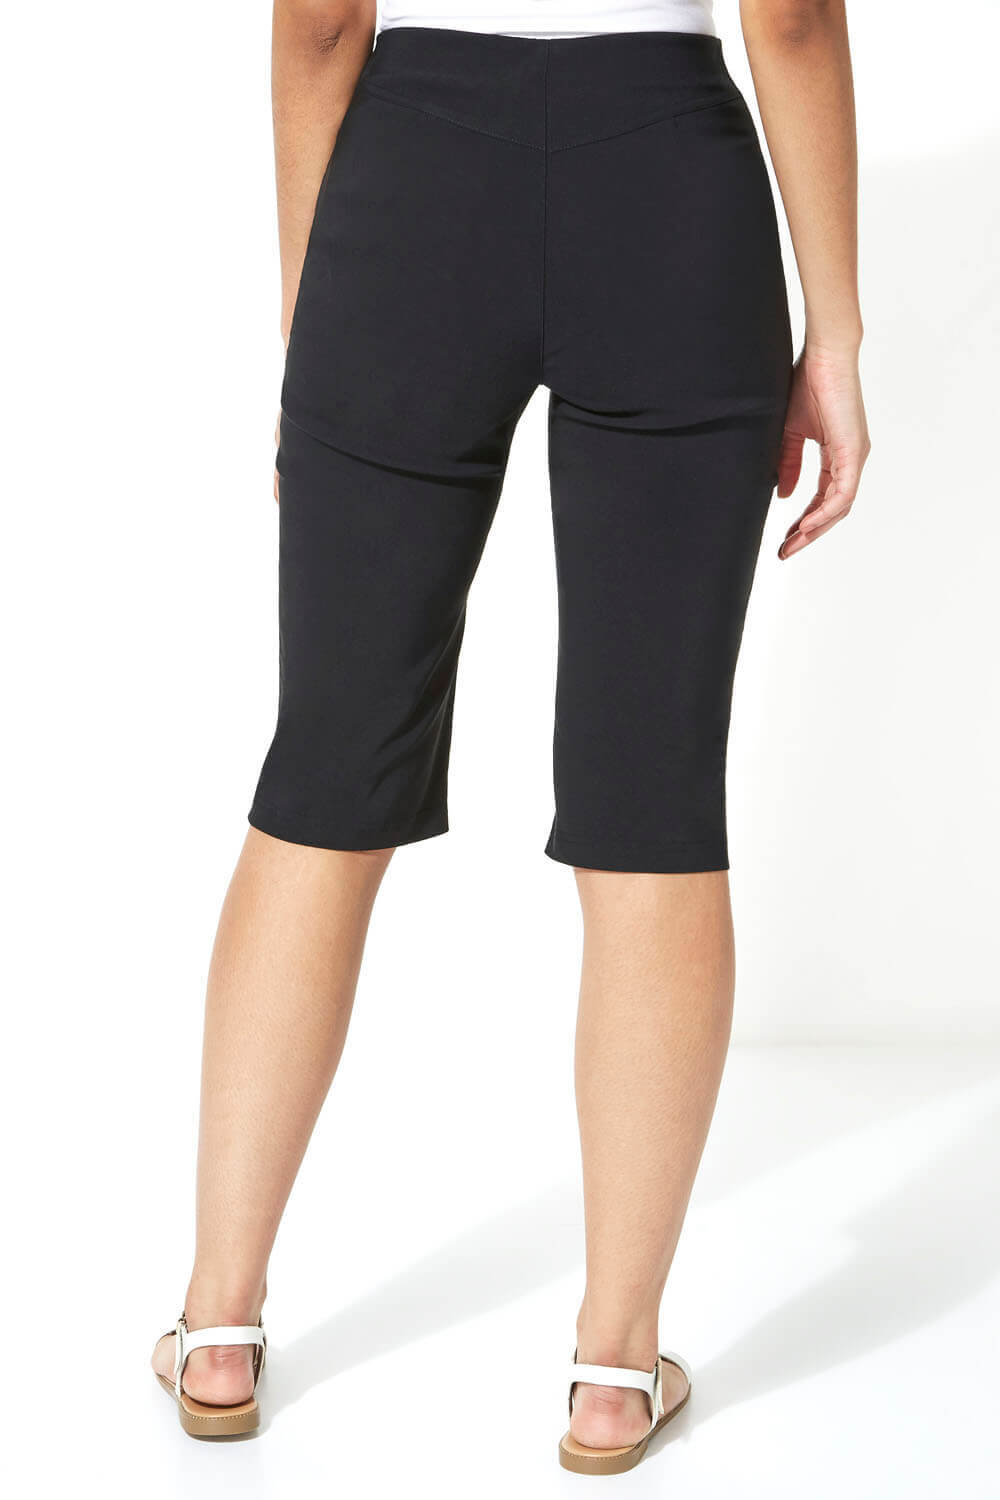 Black Stretch Knee Length Shorts, Image 2 of 4